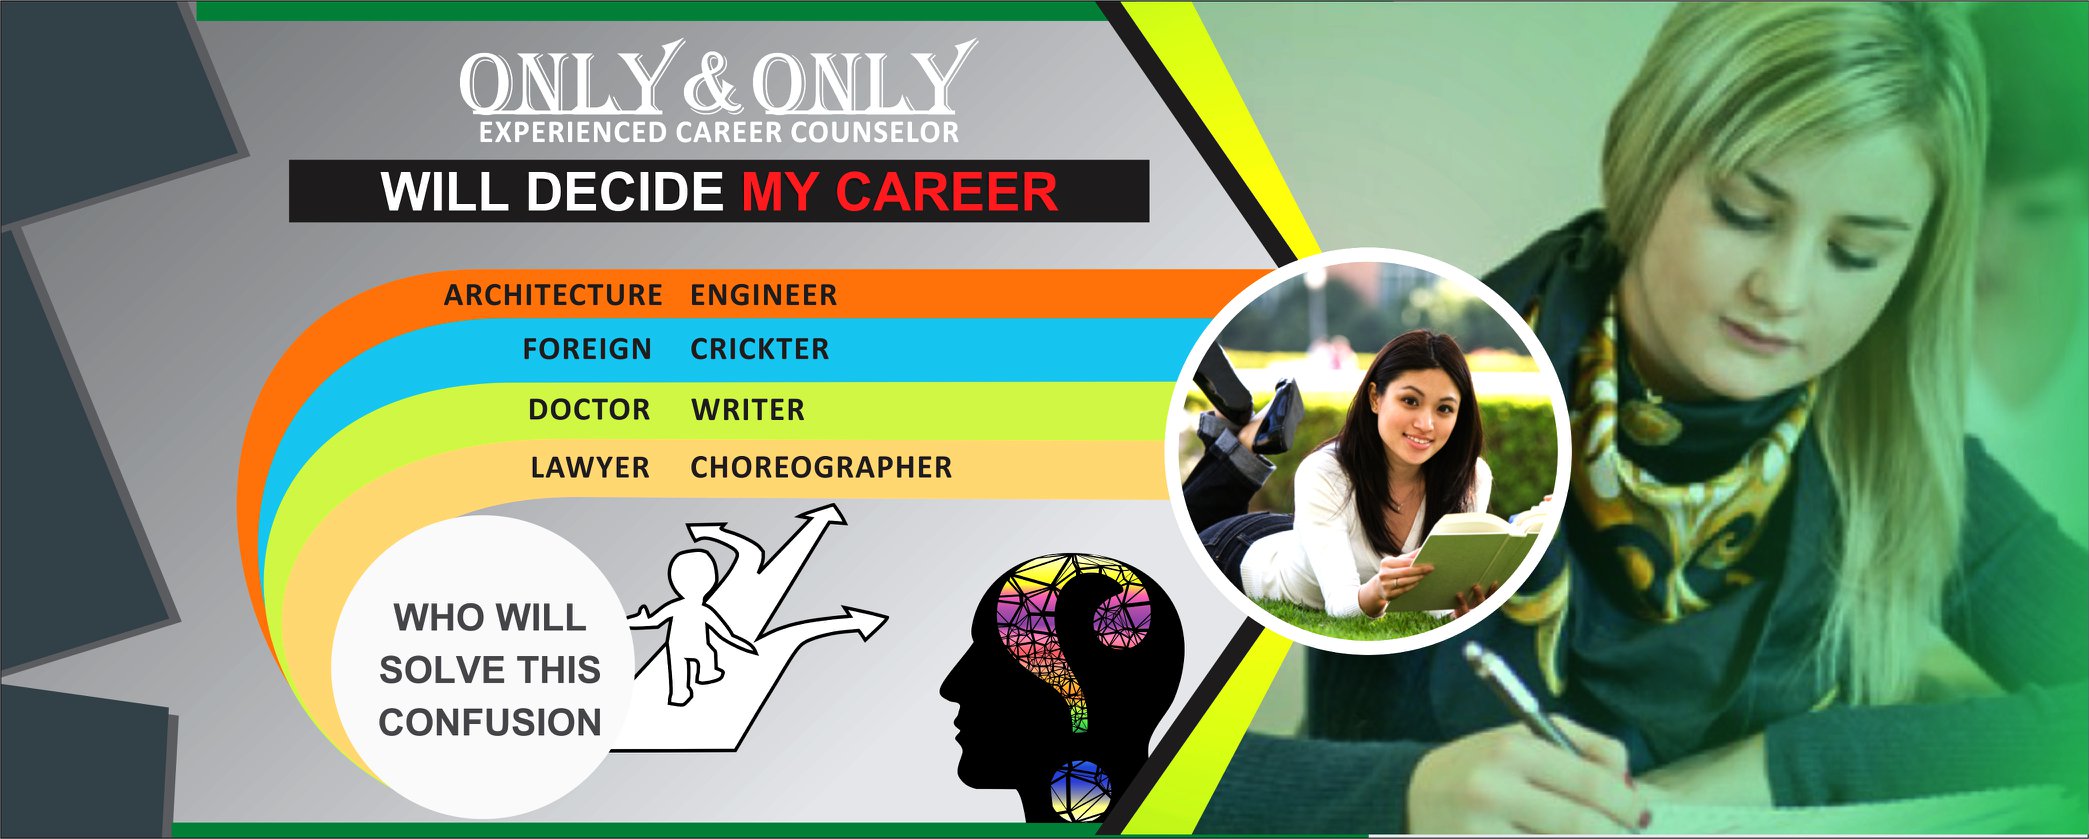 Best Career Counselling In Delhi